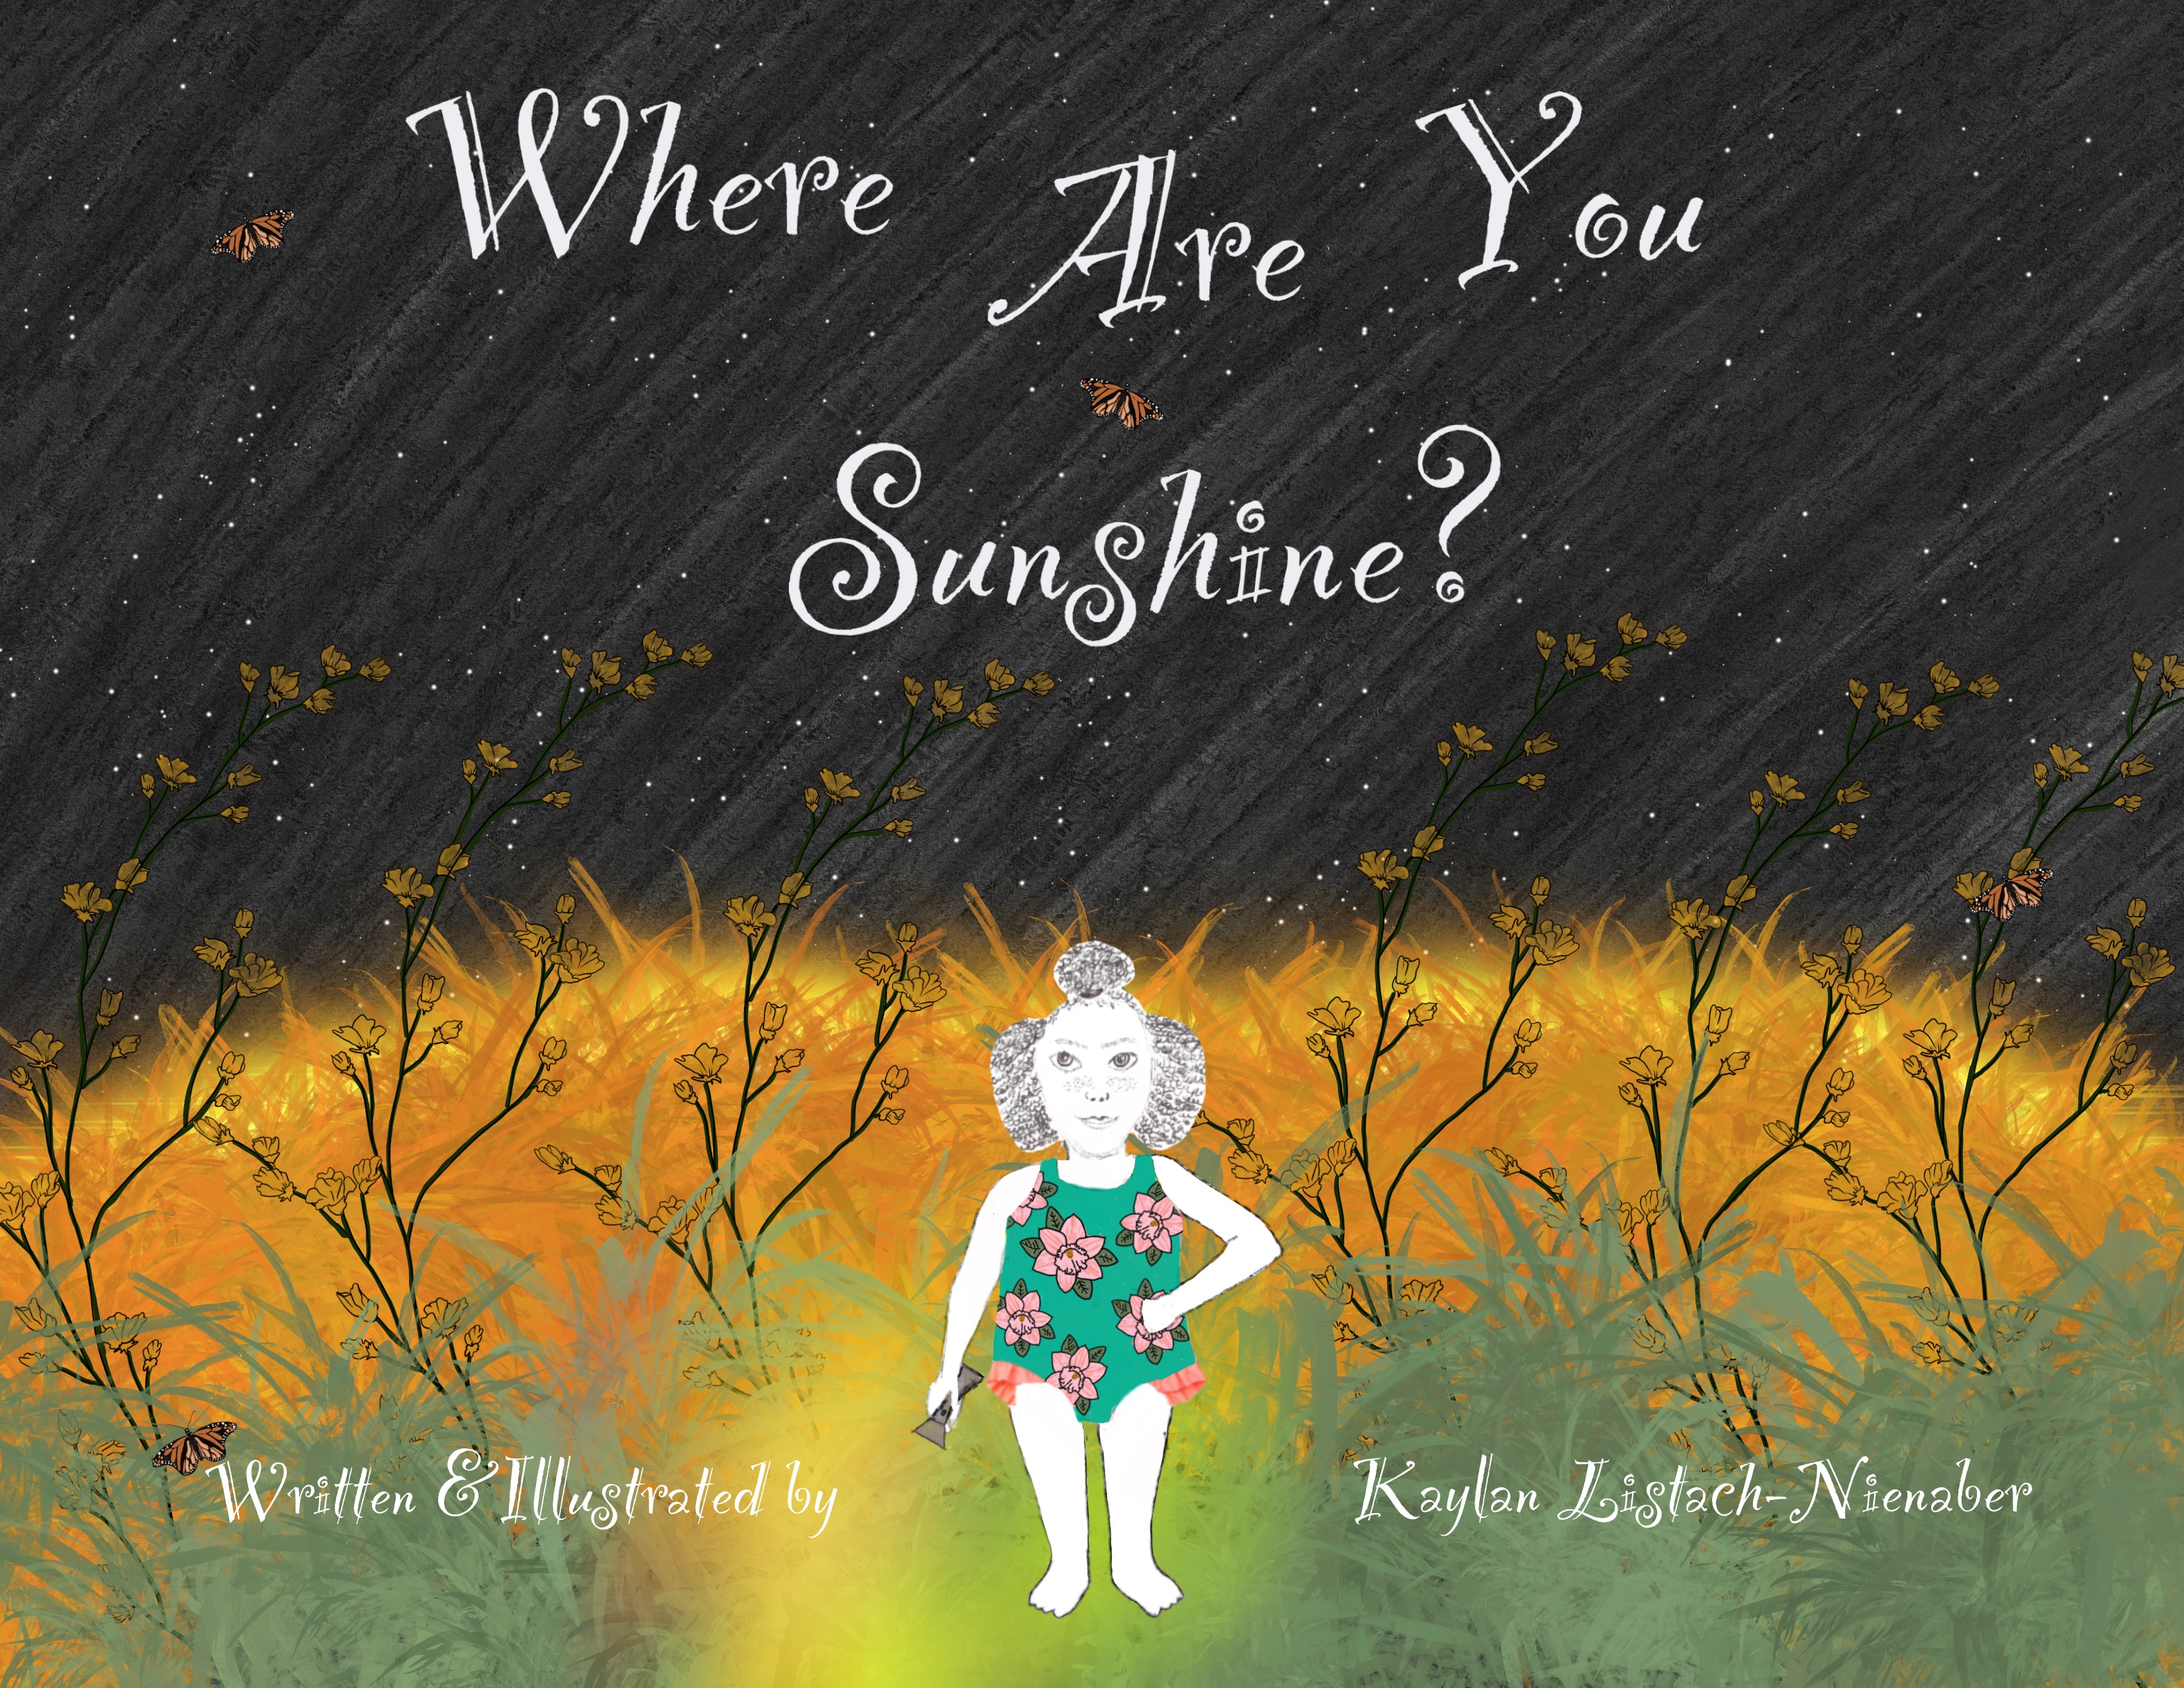 Kaylan Listach-Nienaber, an Elementary School Teacher, Releases "Where Are You Sunshine?"